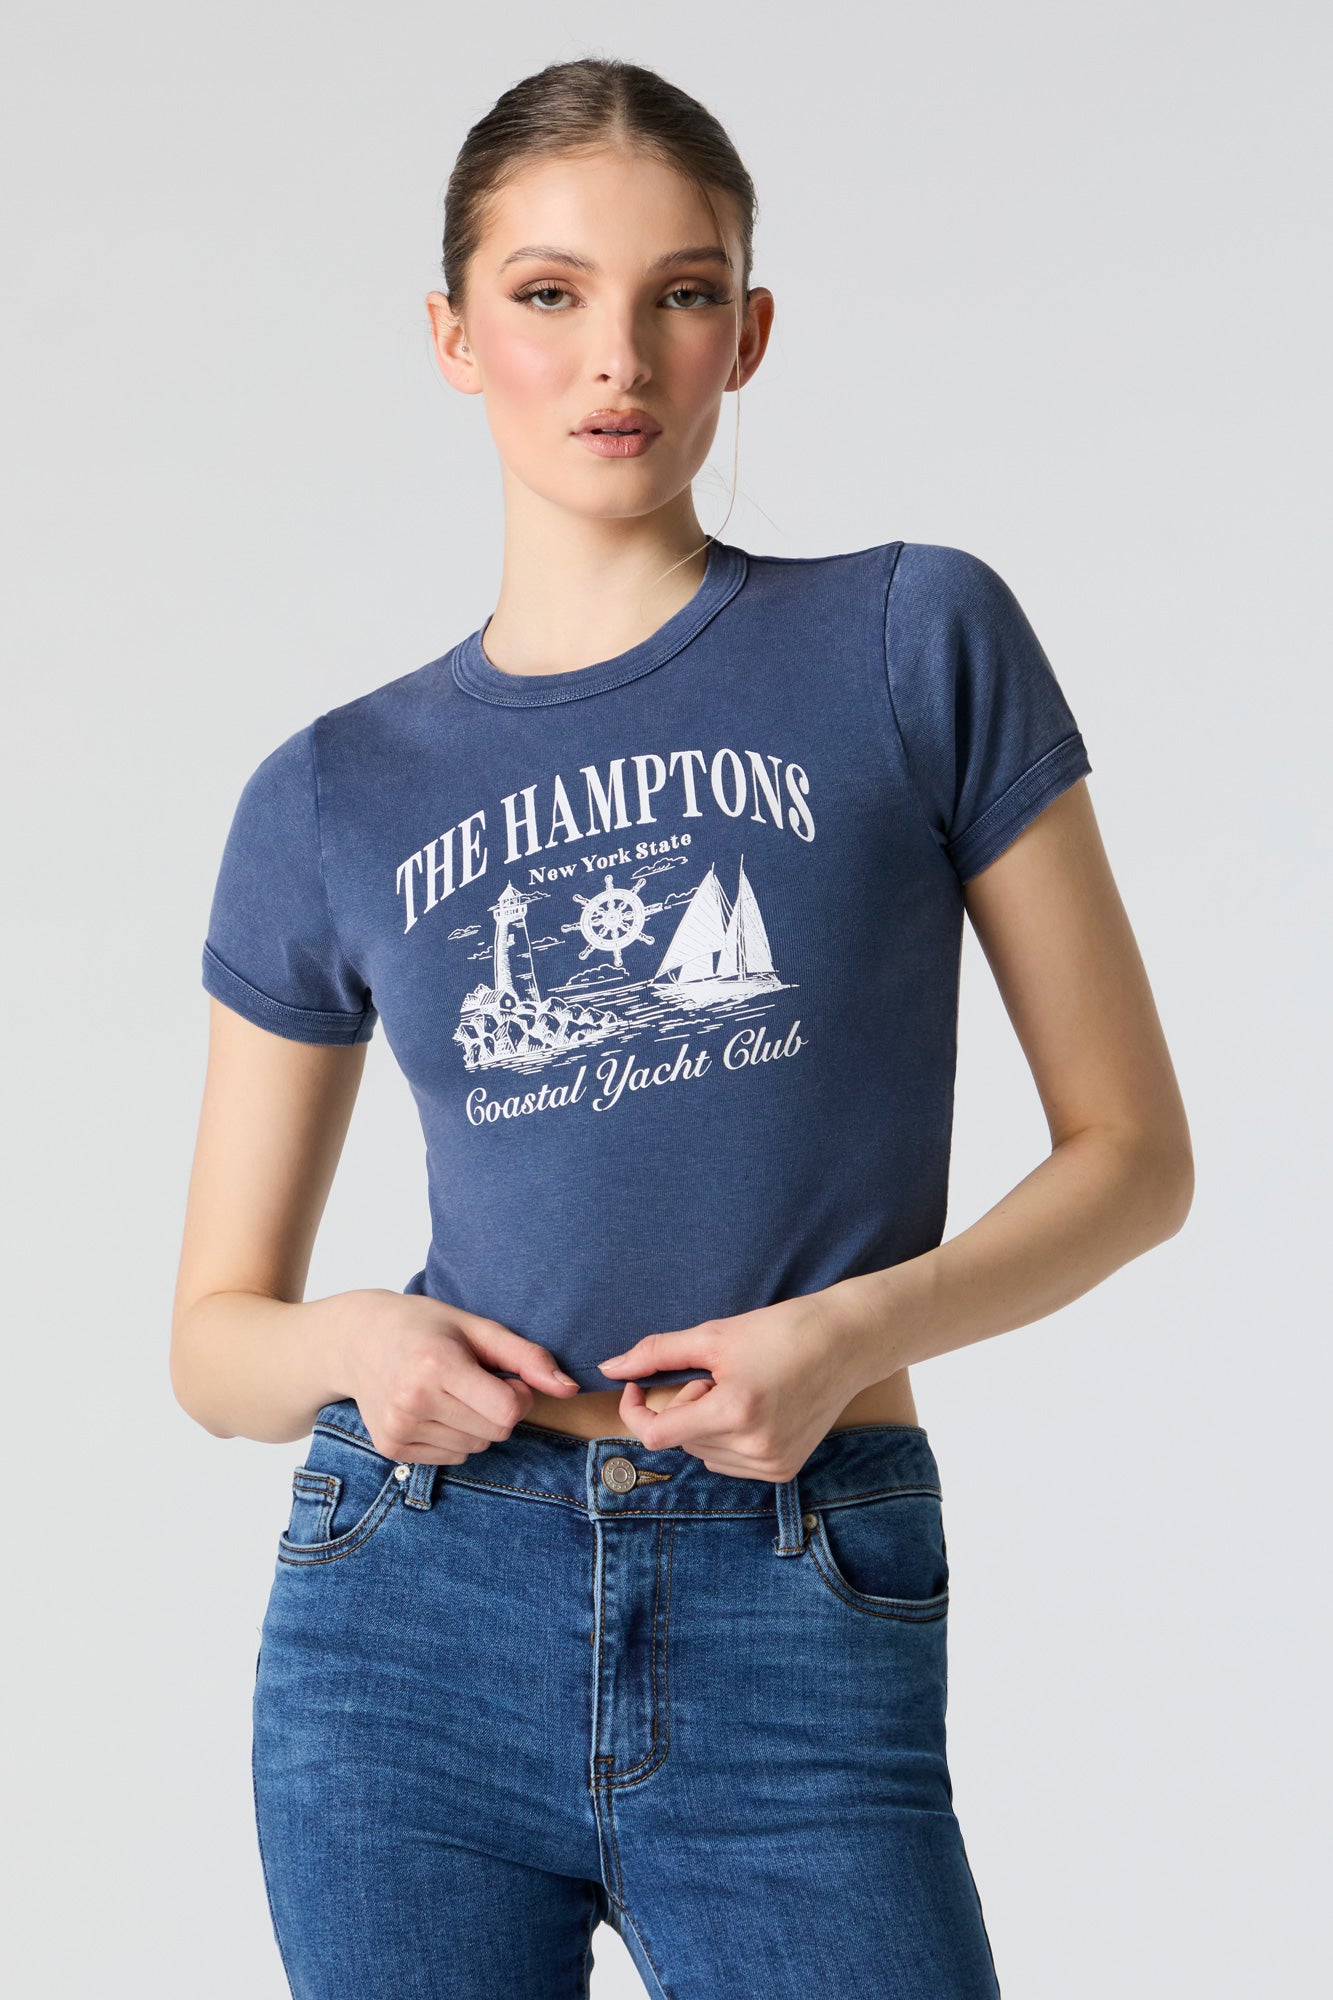 The Hamptons Graphic Baby T-Shirt